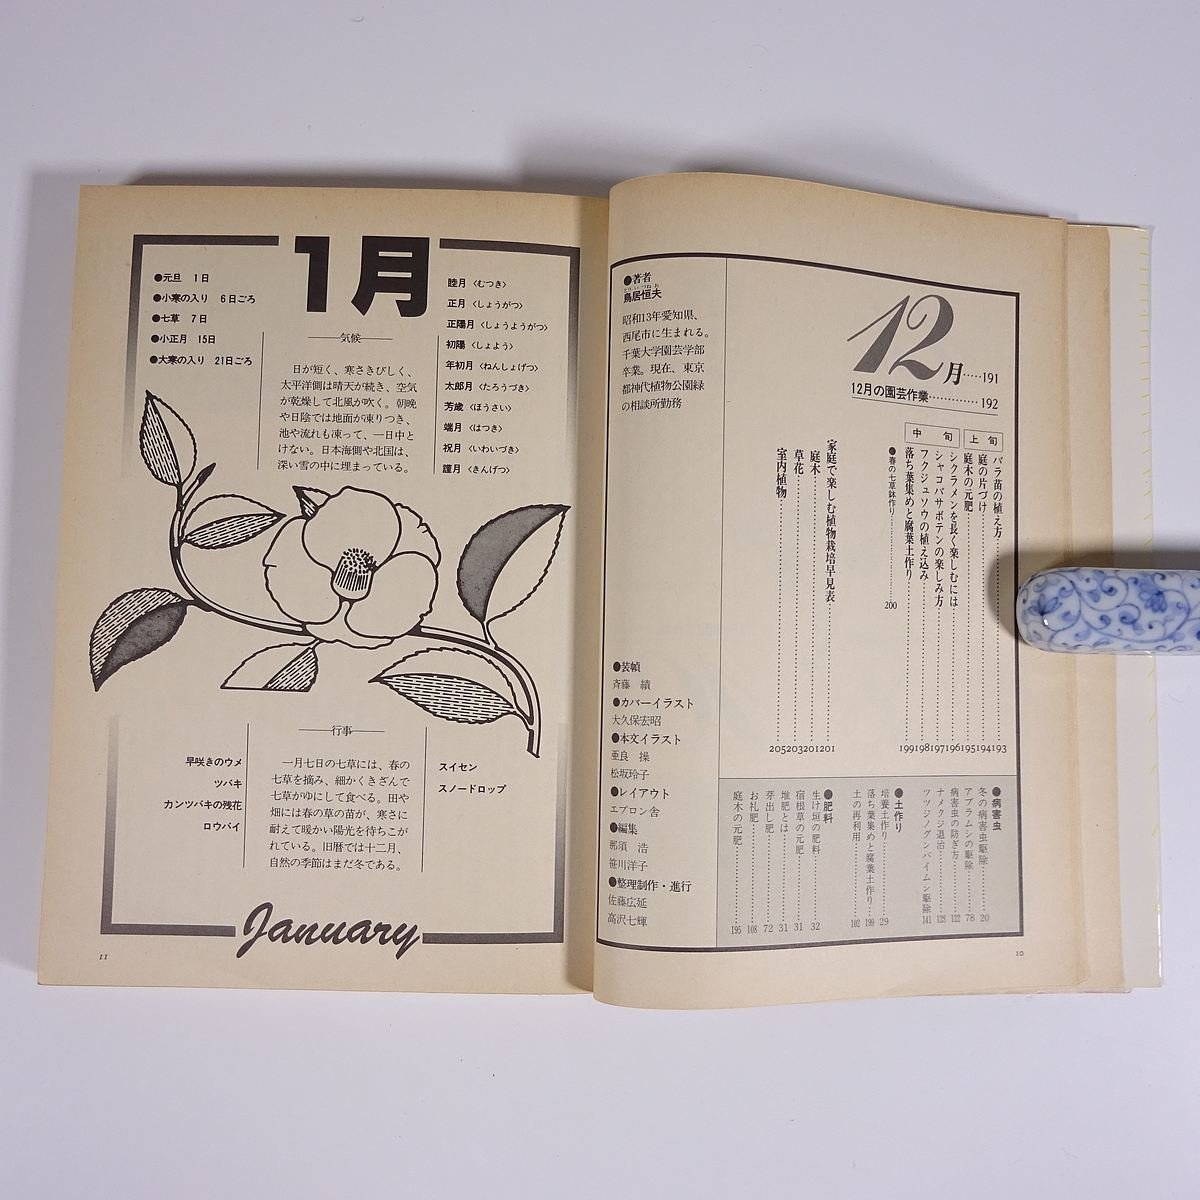  gardening 12. month immediately position be established work calendar torii . Hara ... life company 1981 separate volume gardening gardening plant 